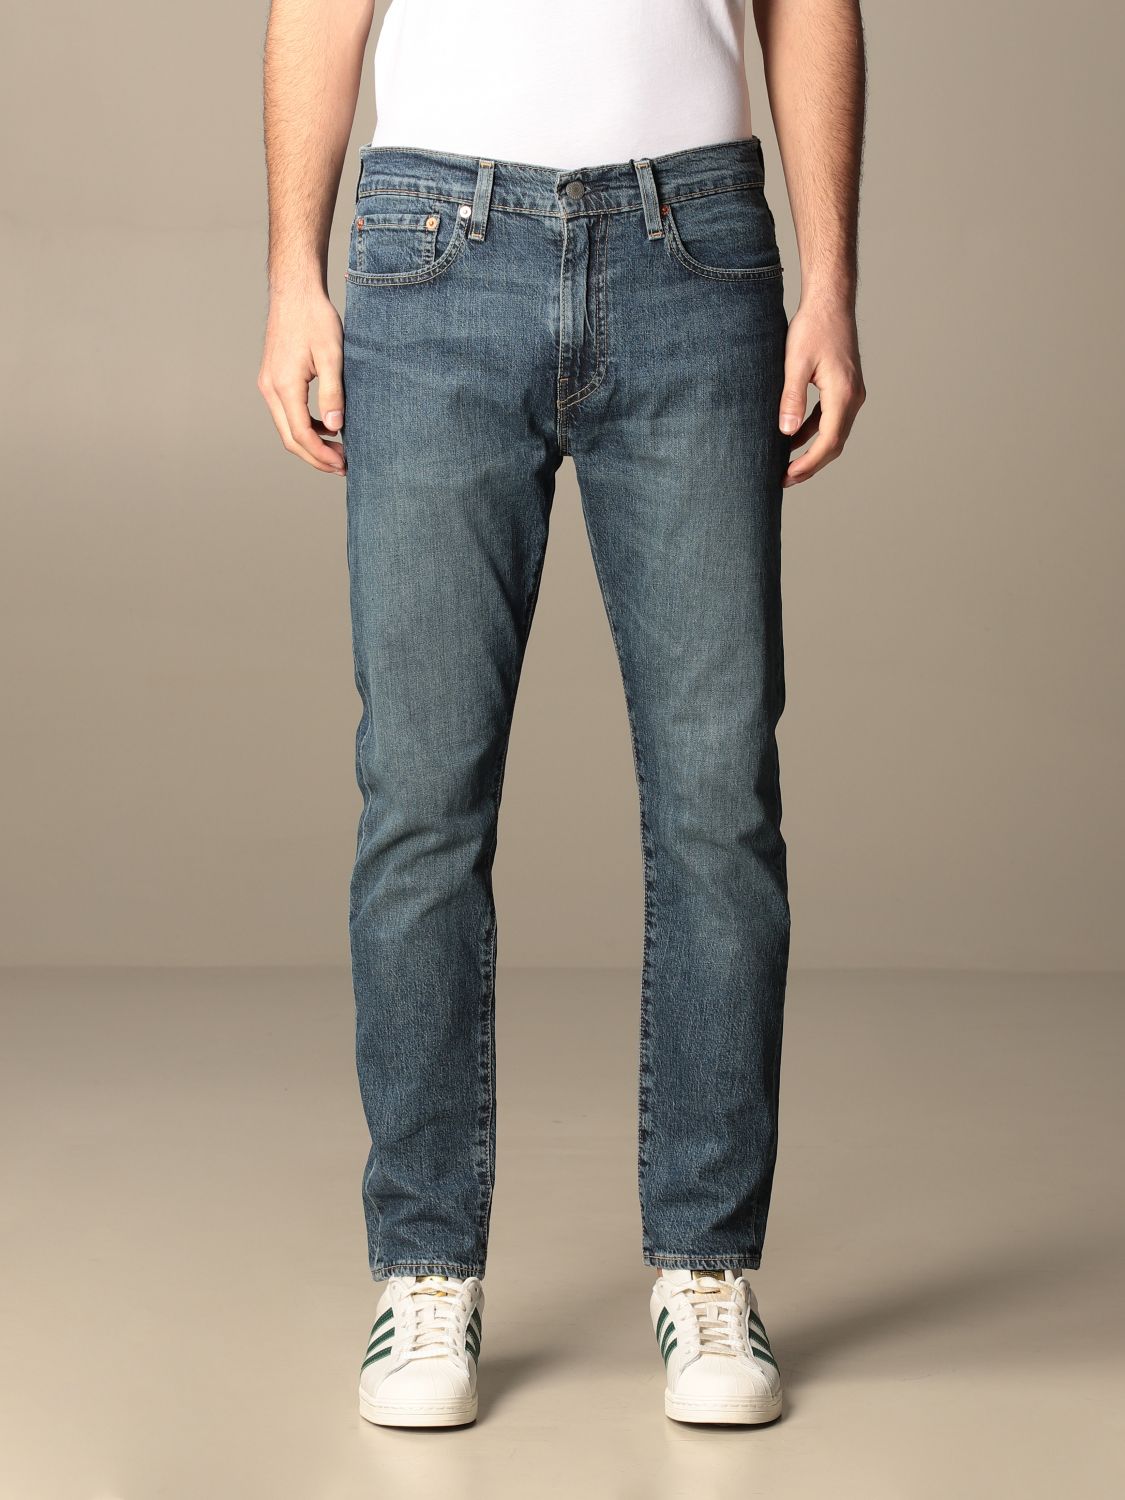 LEVI'S: Jeans herren | Jeans Levi's Herren Denim | Jeans 28833 GIGLIO.COM